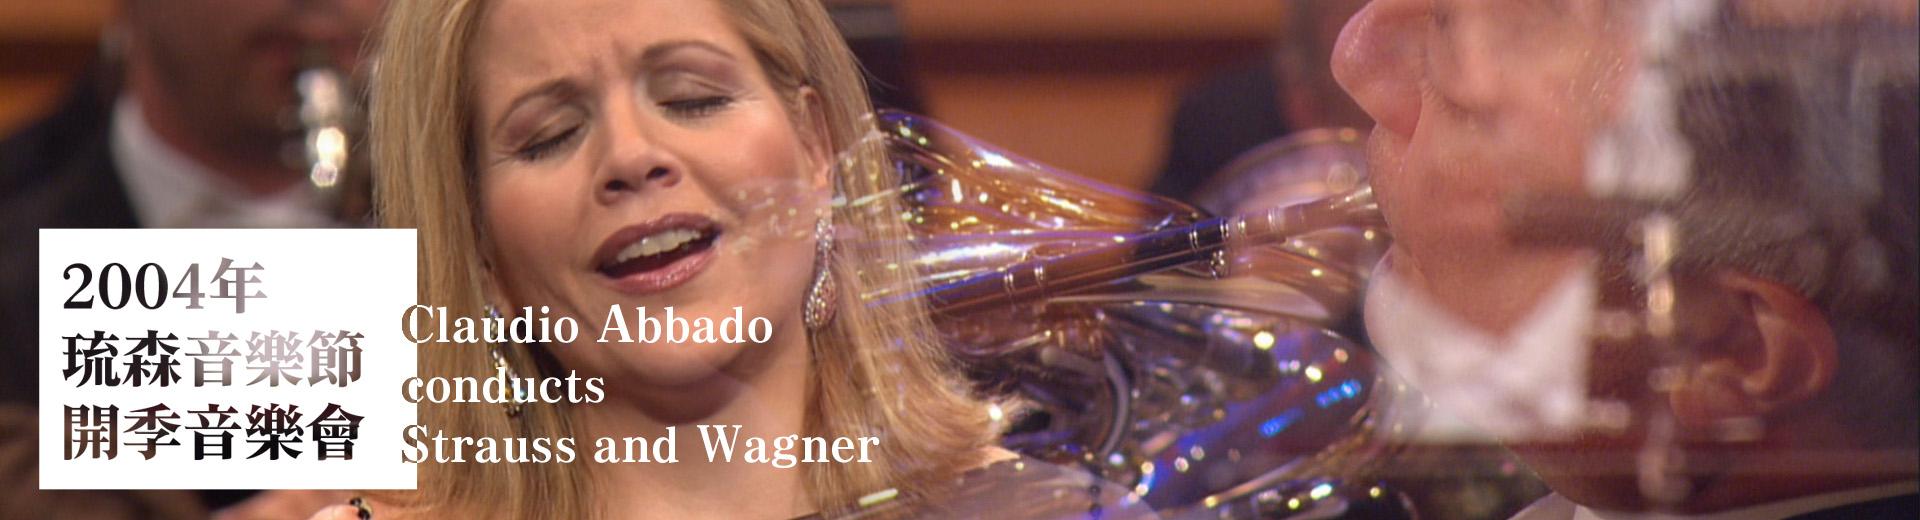 2004年琉森音樂節開季音樂會 Claudio Abbado conducts Strauss and Wagner